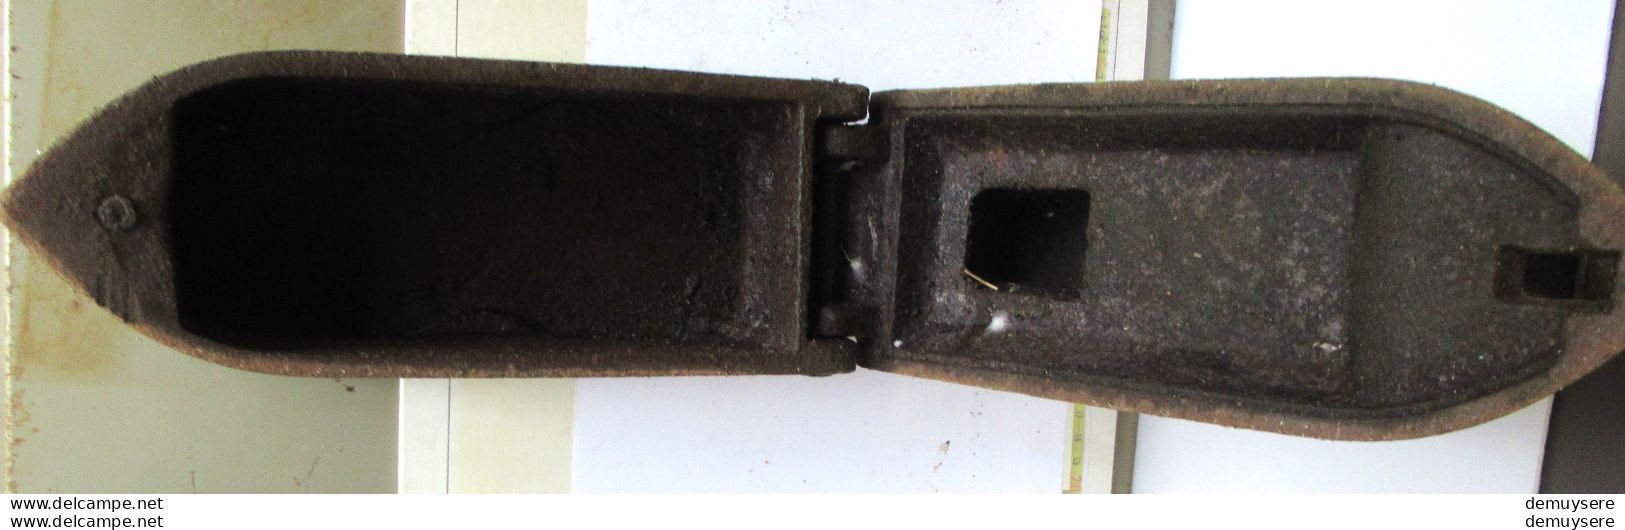 0404 20 - KAS - 20-10 - Antiek Strijkijzer  - Fer Antique  - Paris -  7500  Gram - Antike Werkzeuge